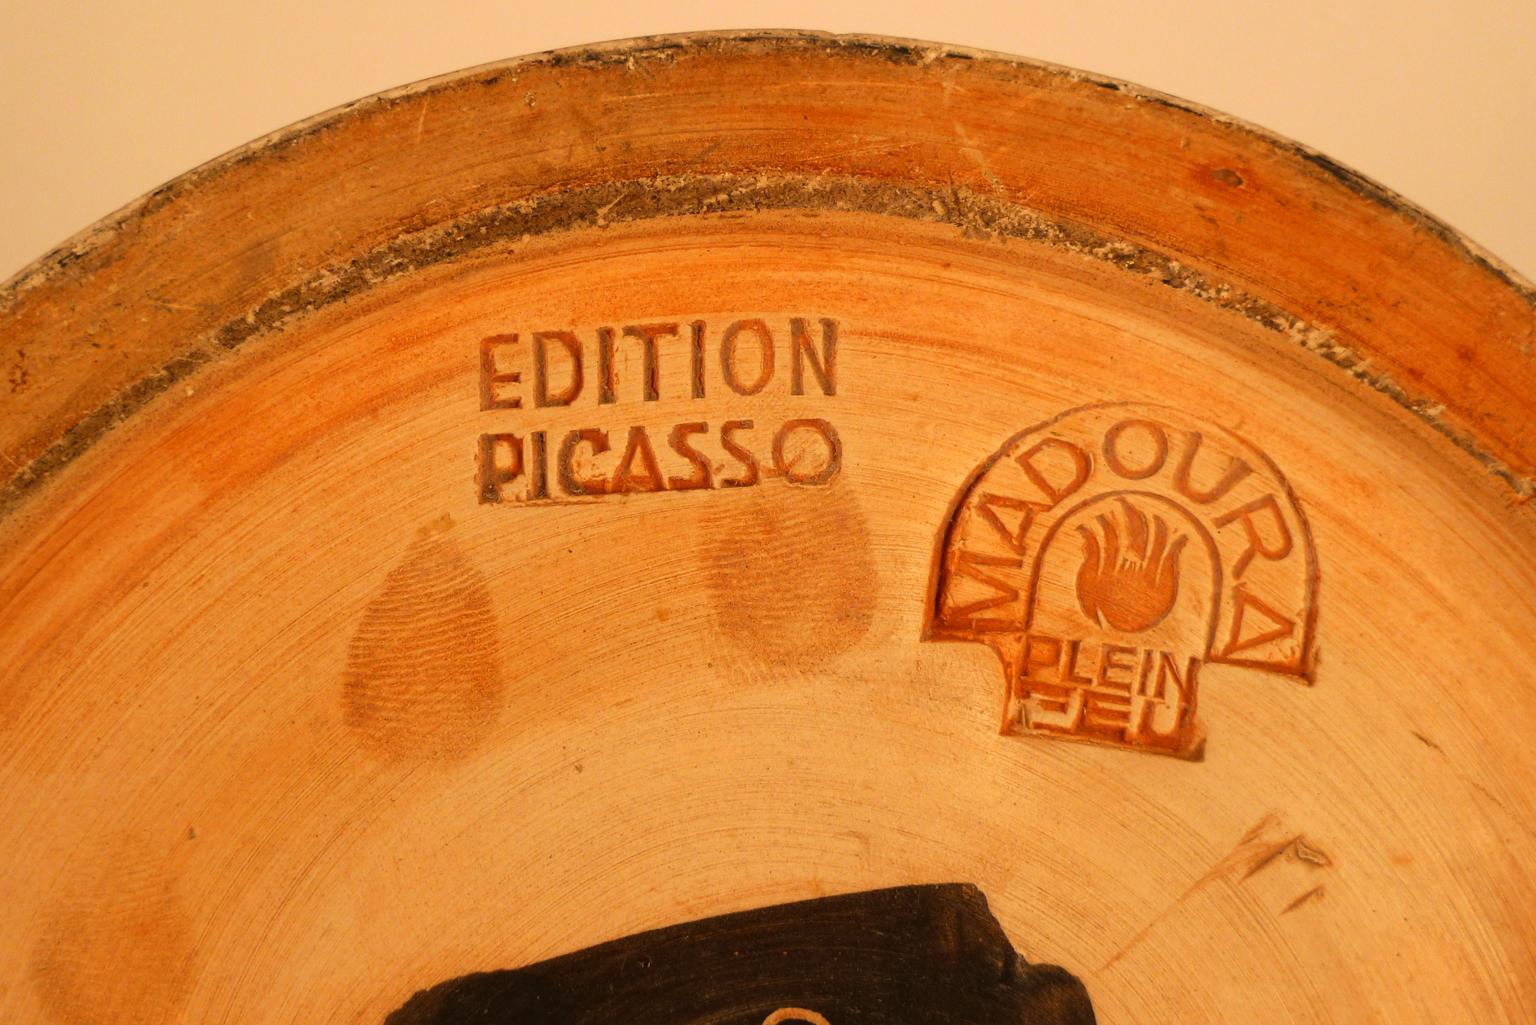 Pichet aux Oiseaux (AR 456), Ceramic Stamped 'Madoura Plein Feu/Edition Picasso' For Sale 4